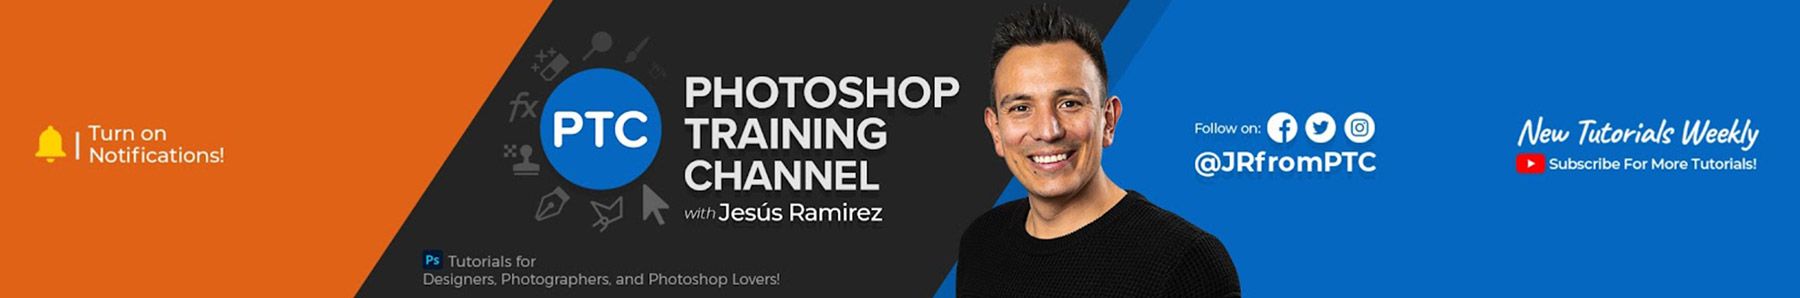 Photoshop training channel